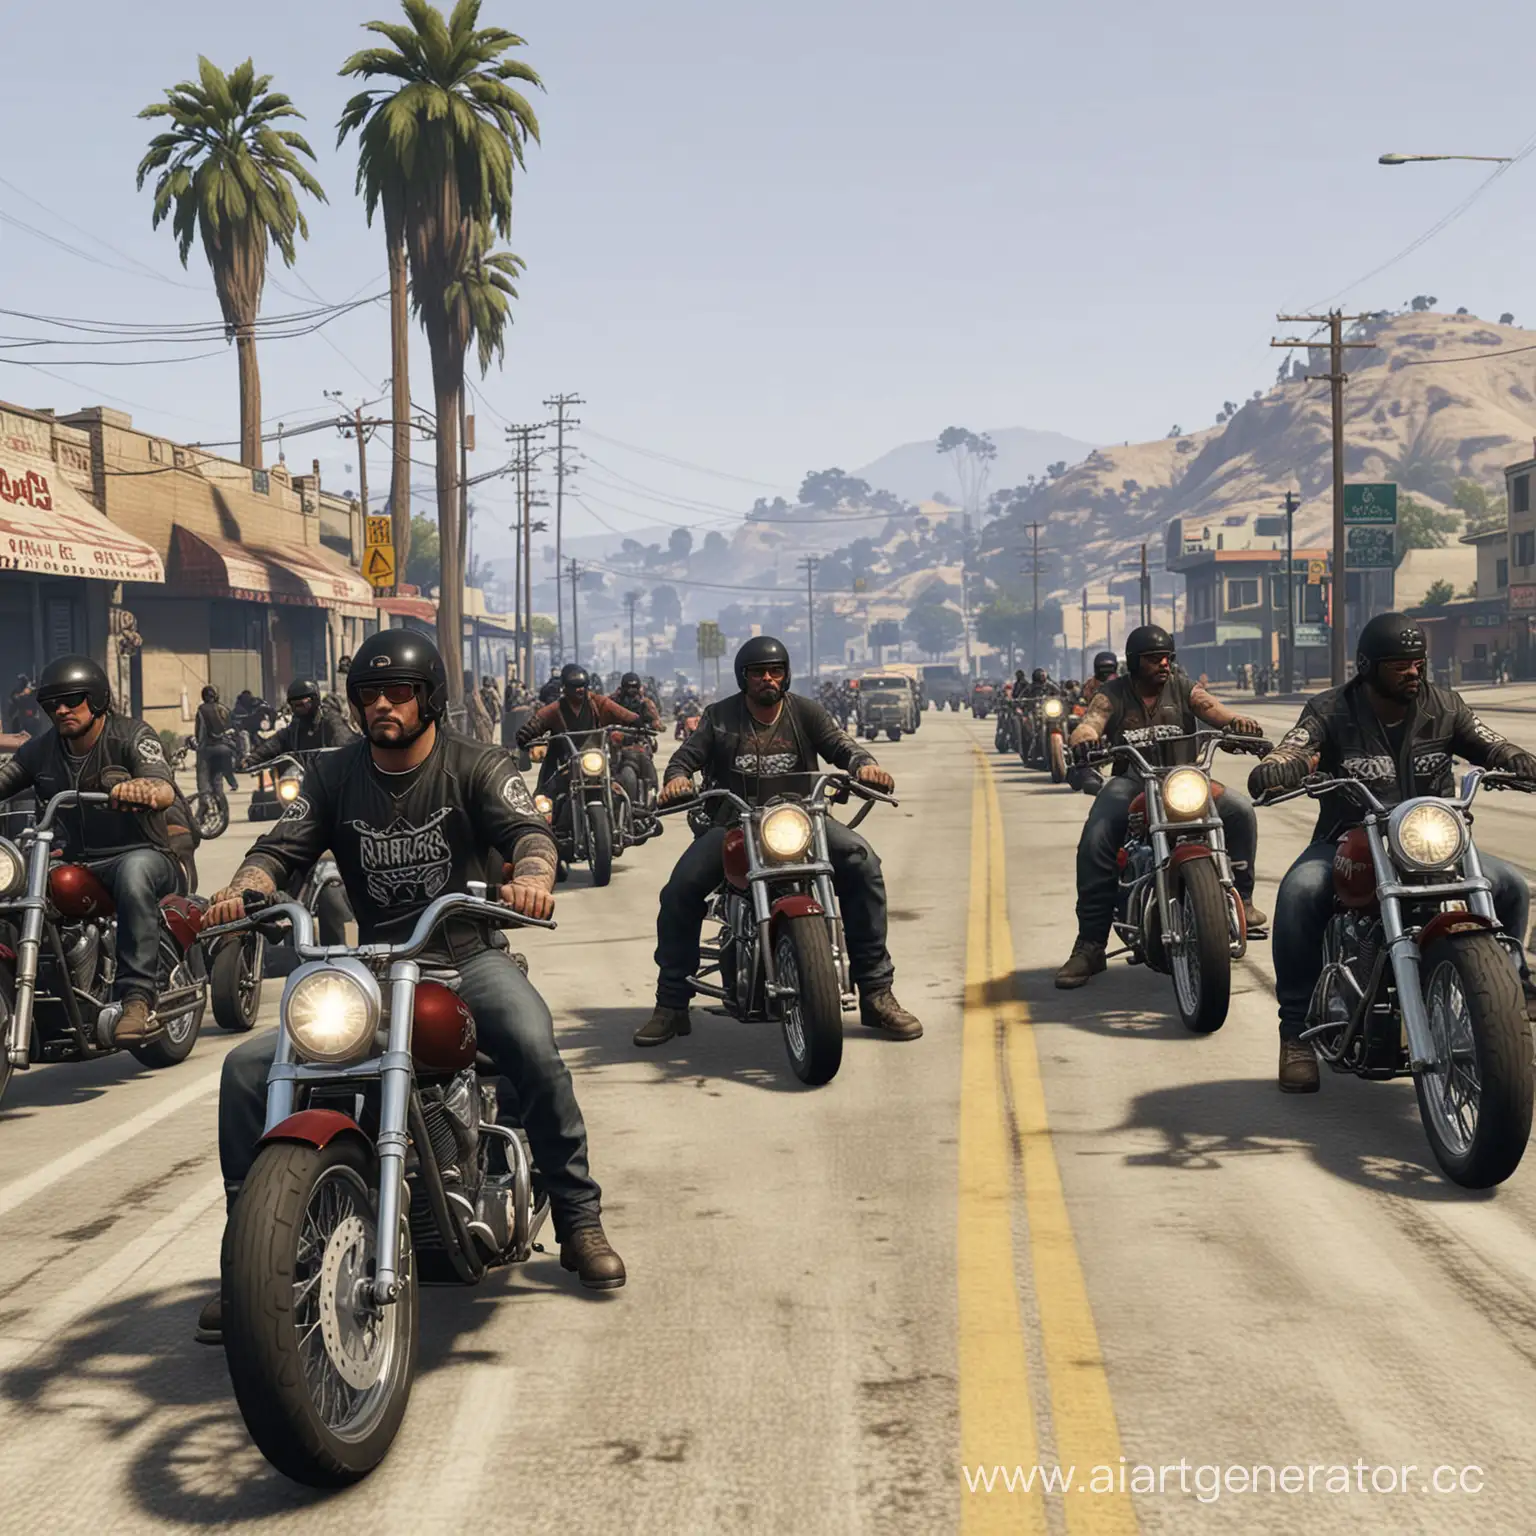 Bandidos-Biker-Club-Rally-in-GTA-5-Game-Environment